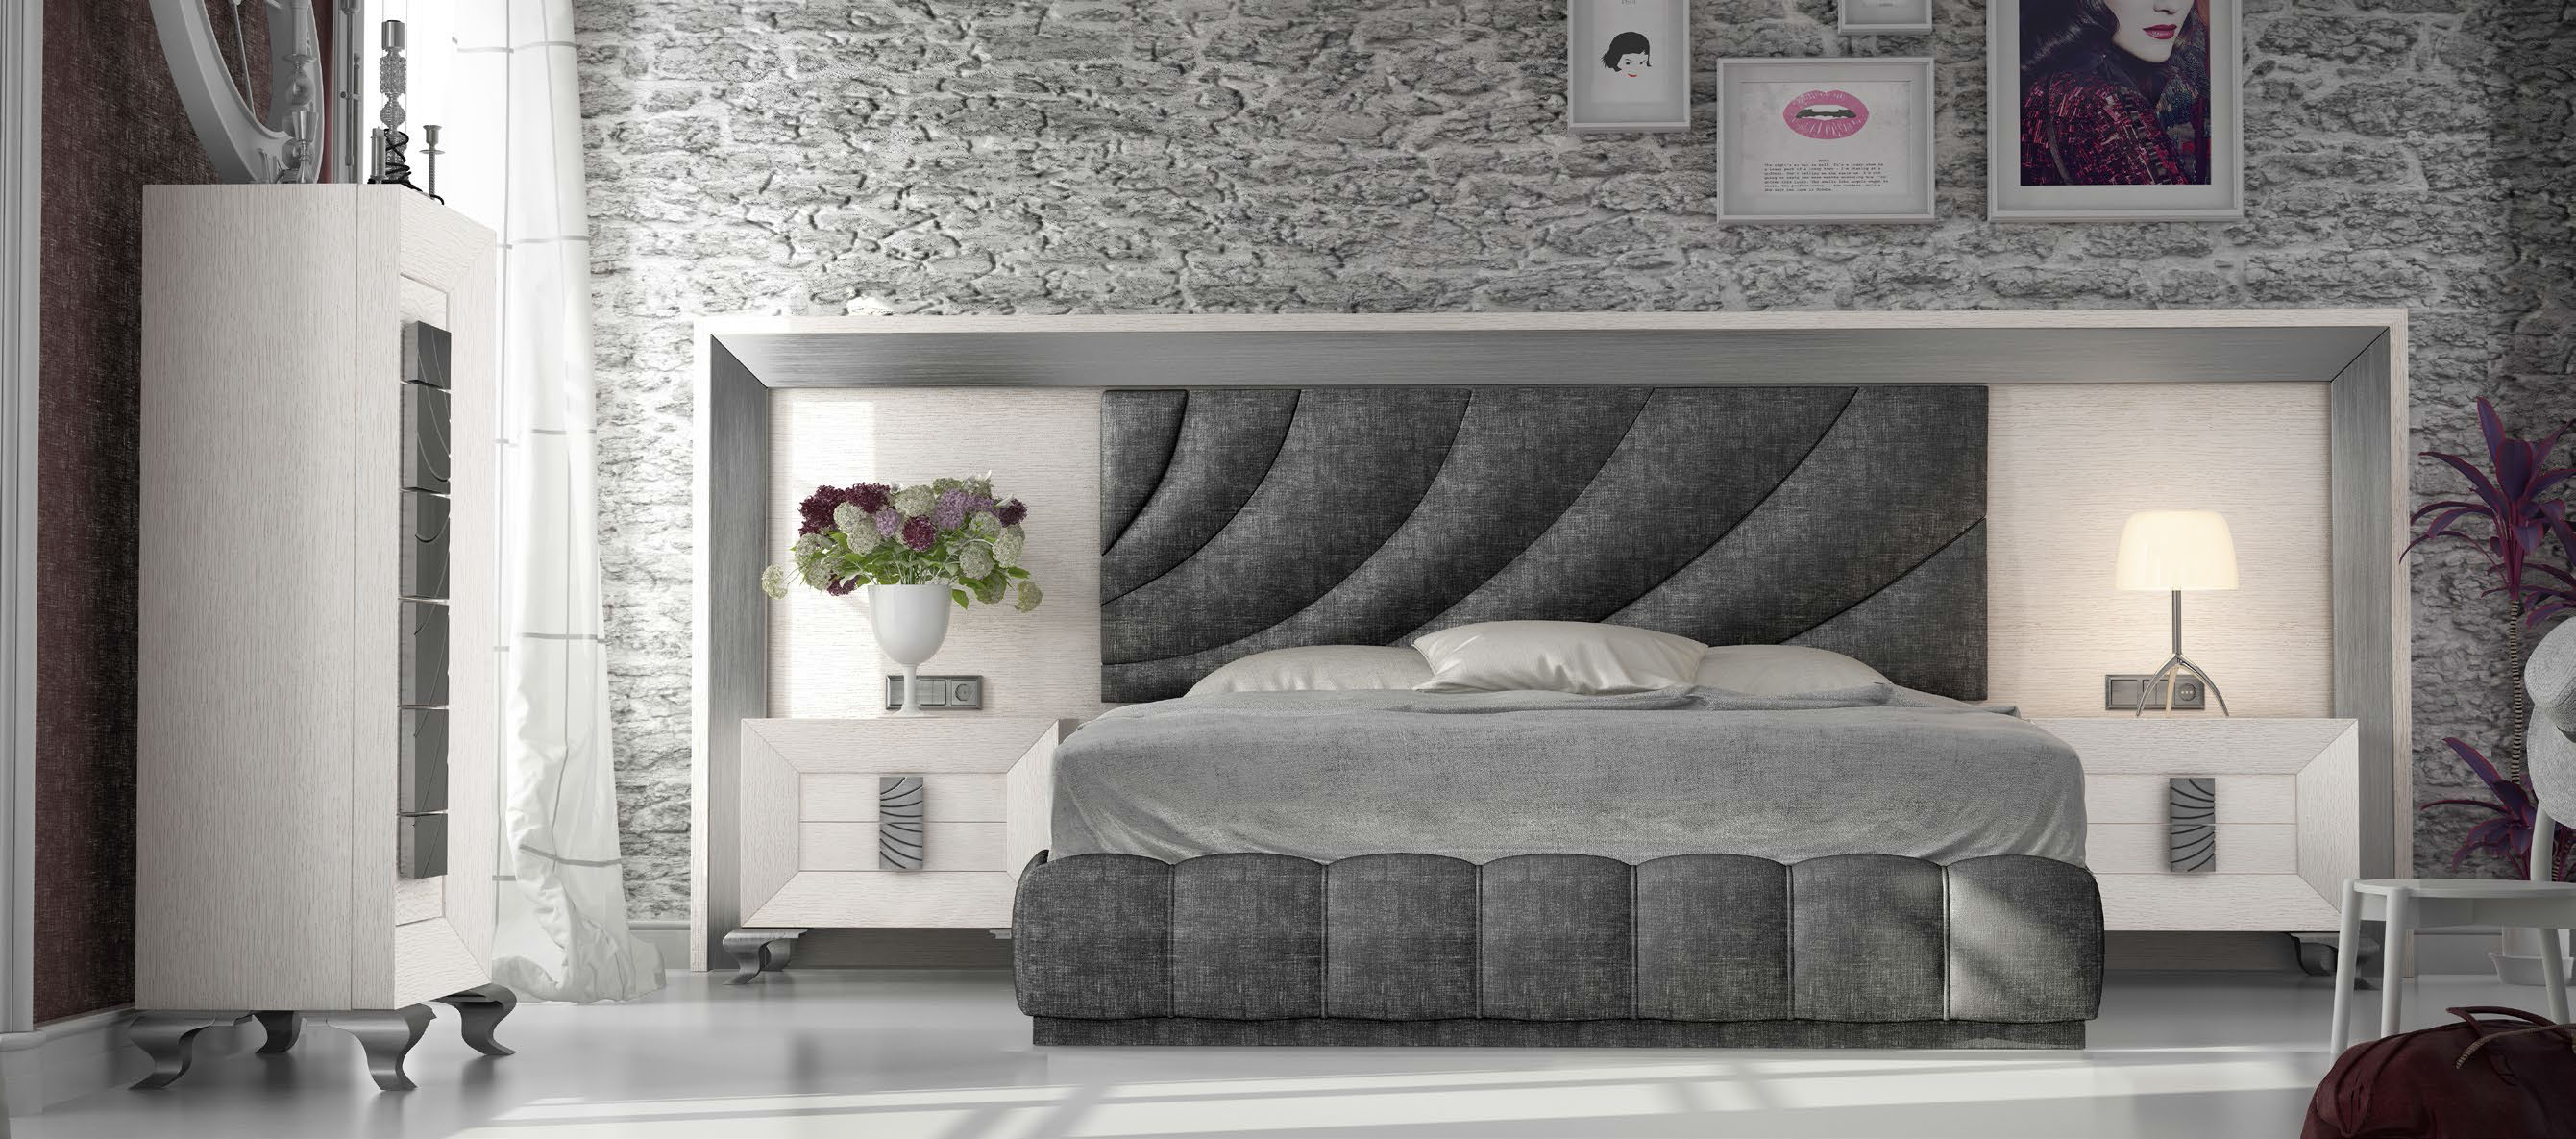 Brands Franco Furniture Bedrooms vol3, Spain DOR 112